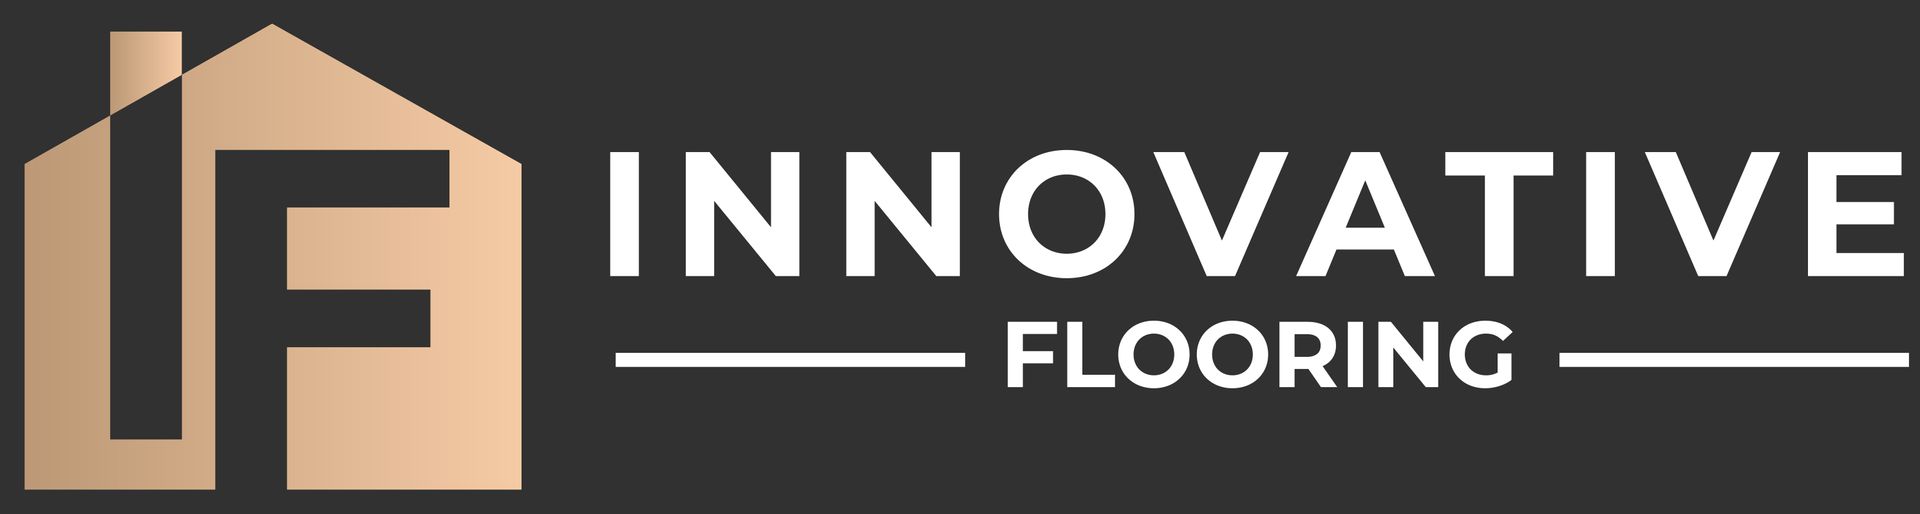 innovative flooring sydney pty ltd-logo